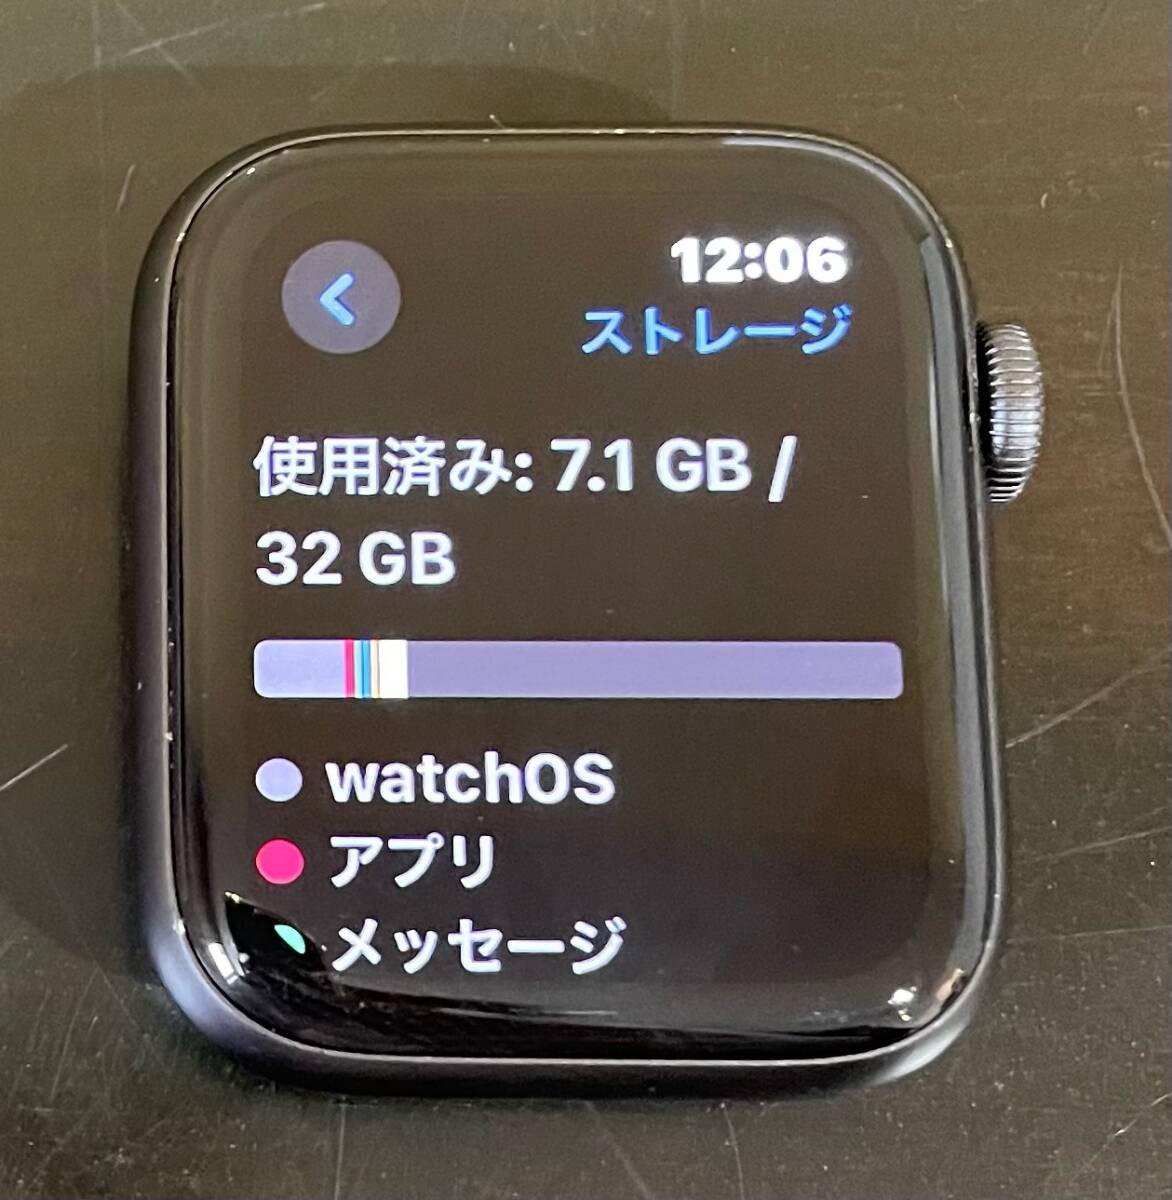  дешевый!! 99 иен старт!! Apple Watch Apple часы серии 6 GPS модель 40mm A2291 32GB смарт-часы Acty беж .n отмена завершено 